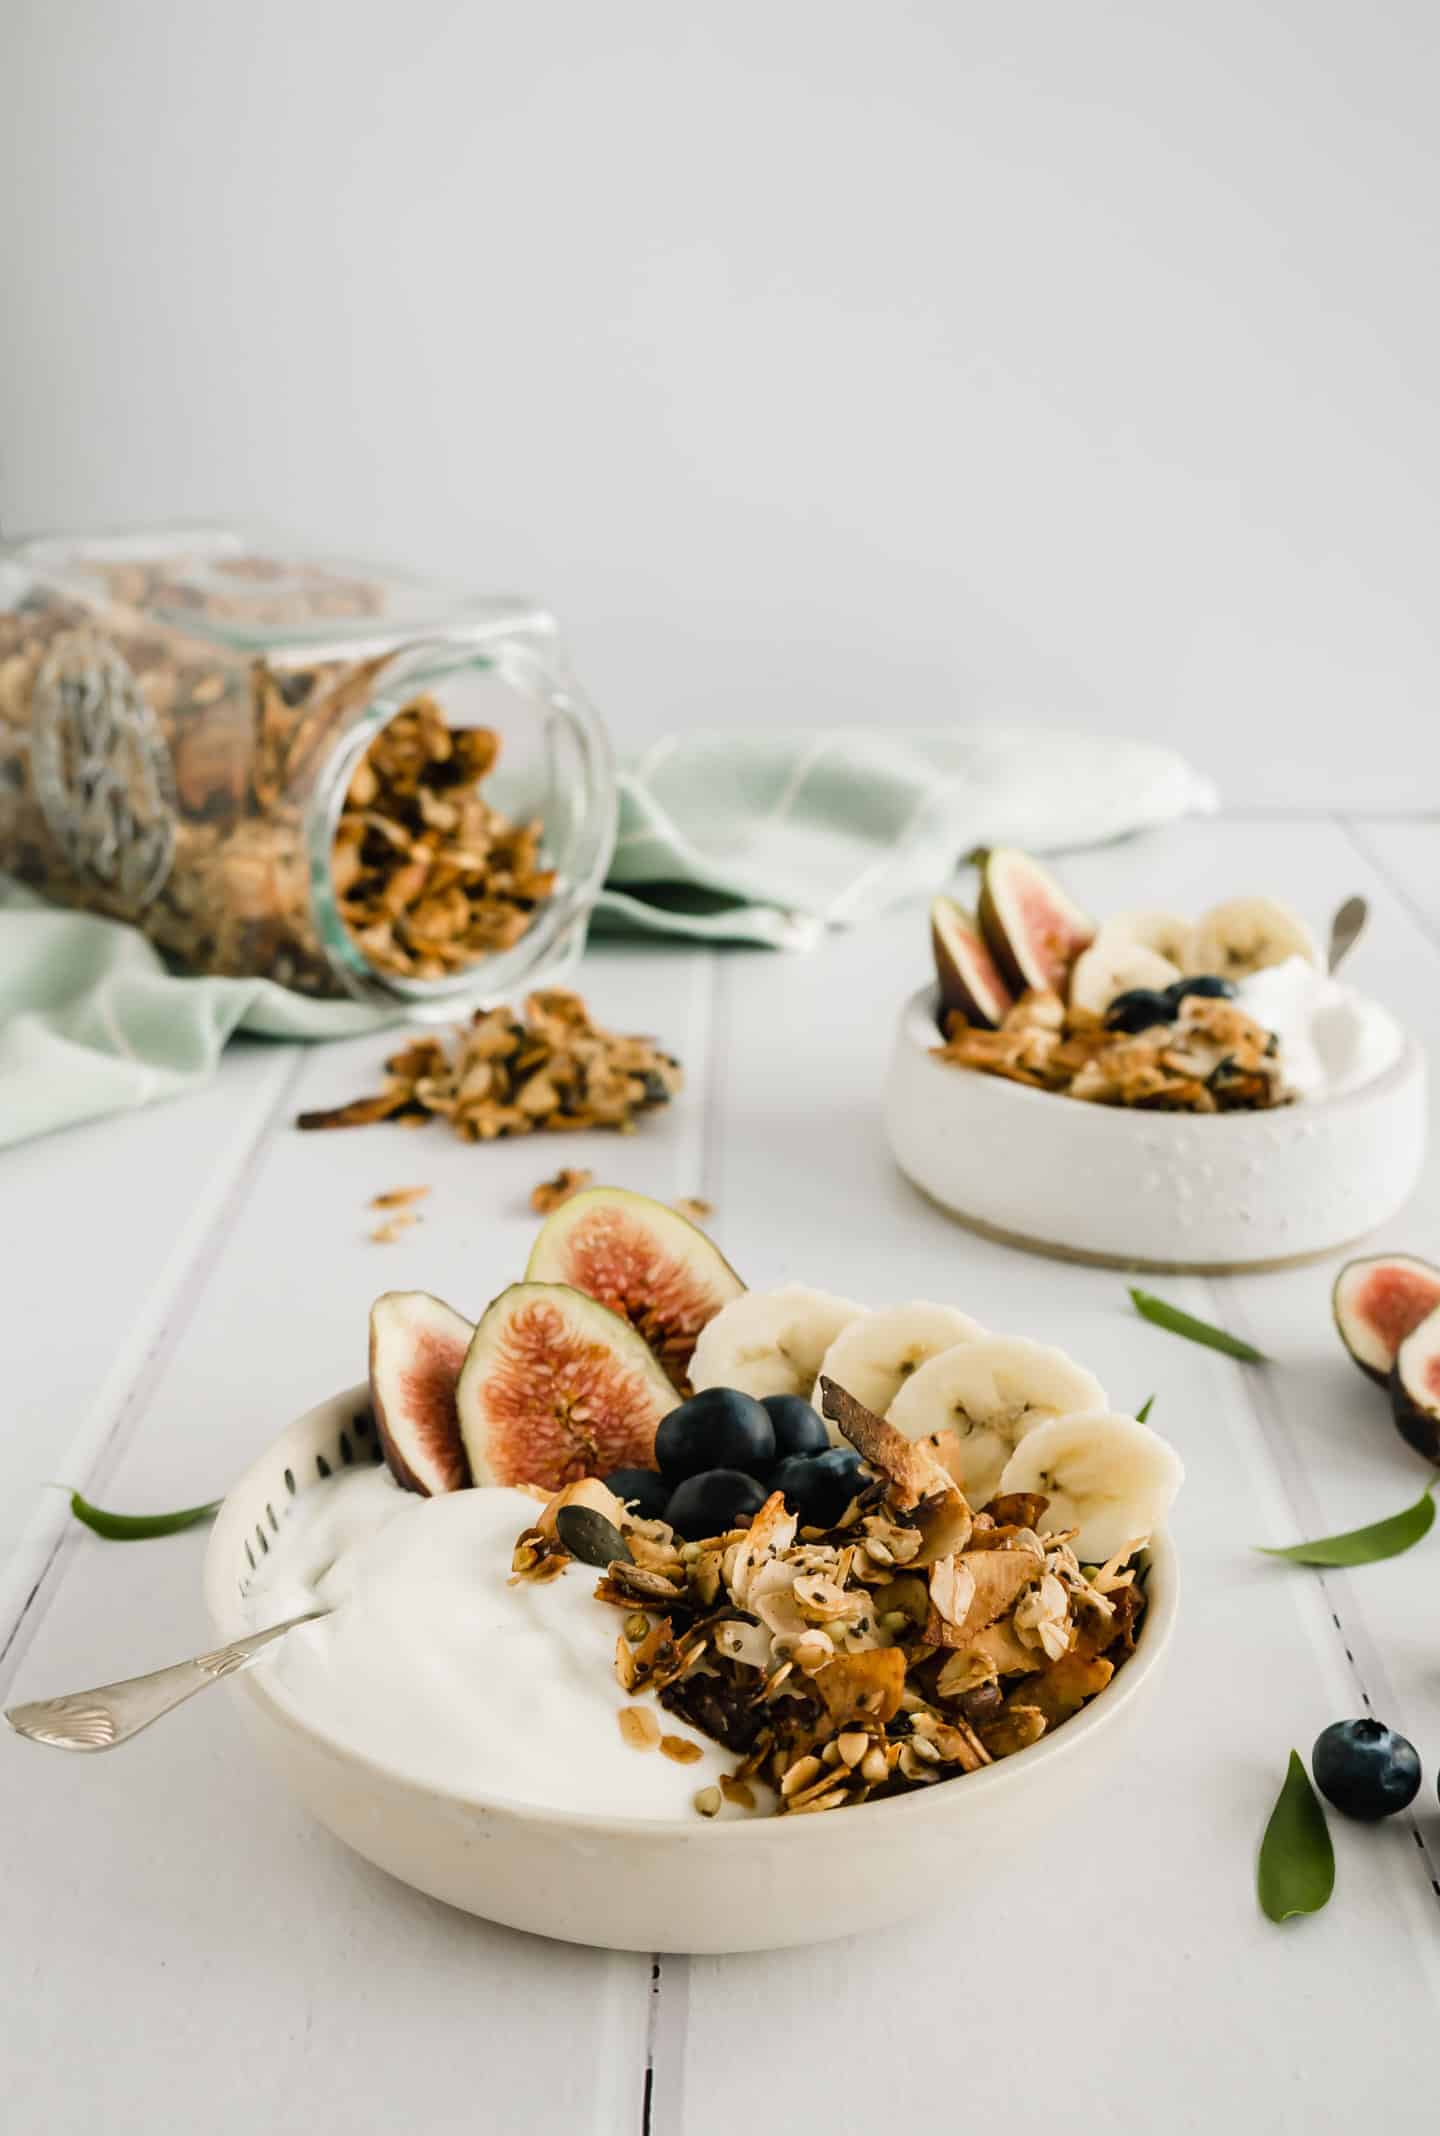 Homemade Granola Breakfast with Greek Yogurt and Fruit